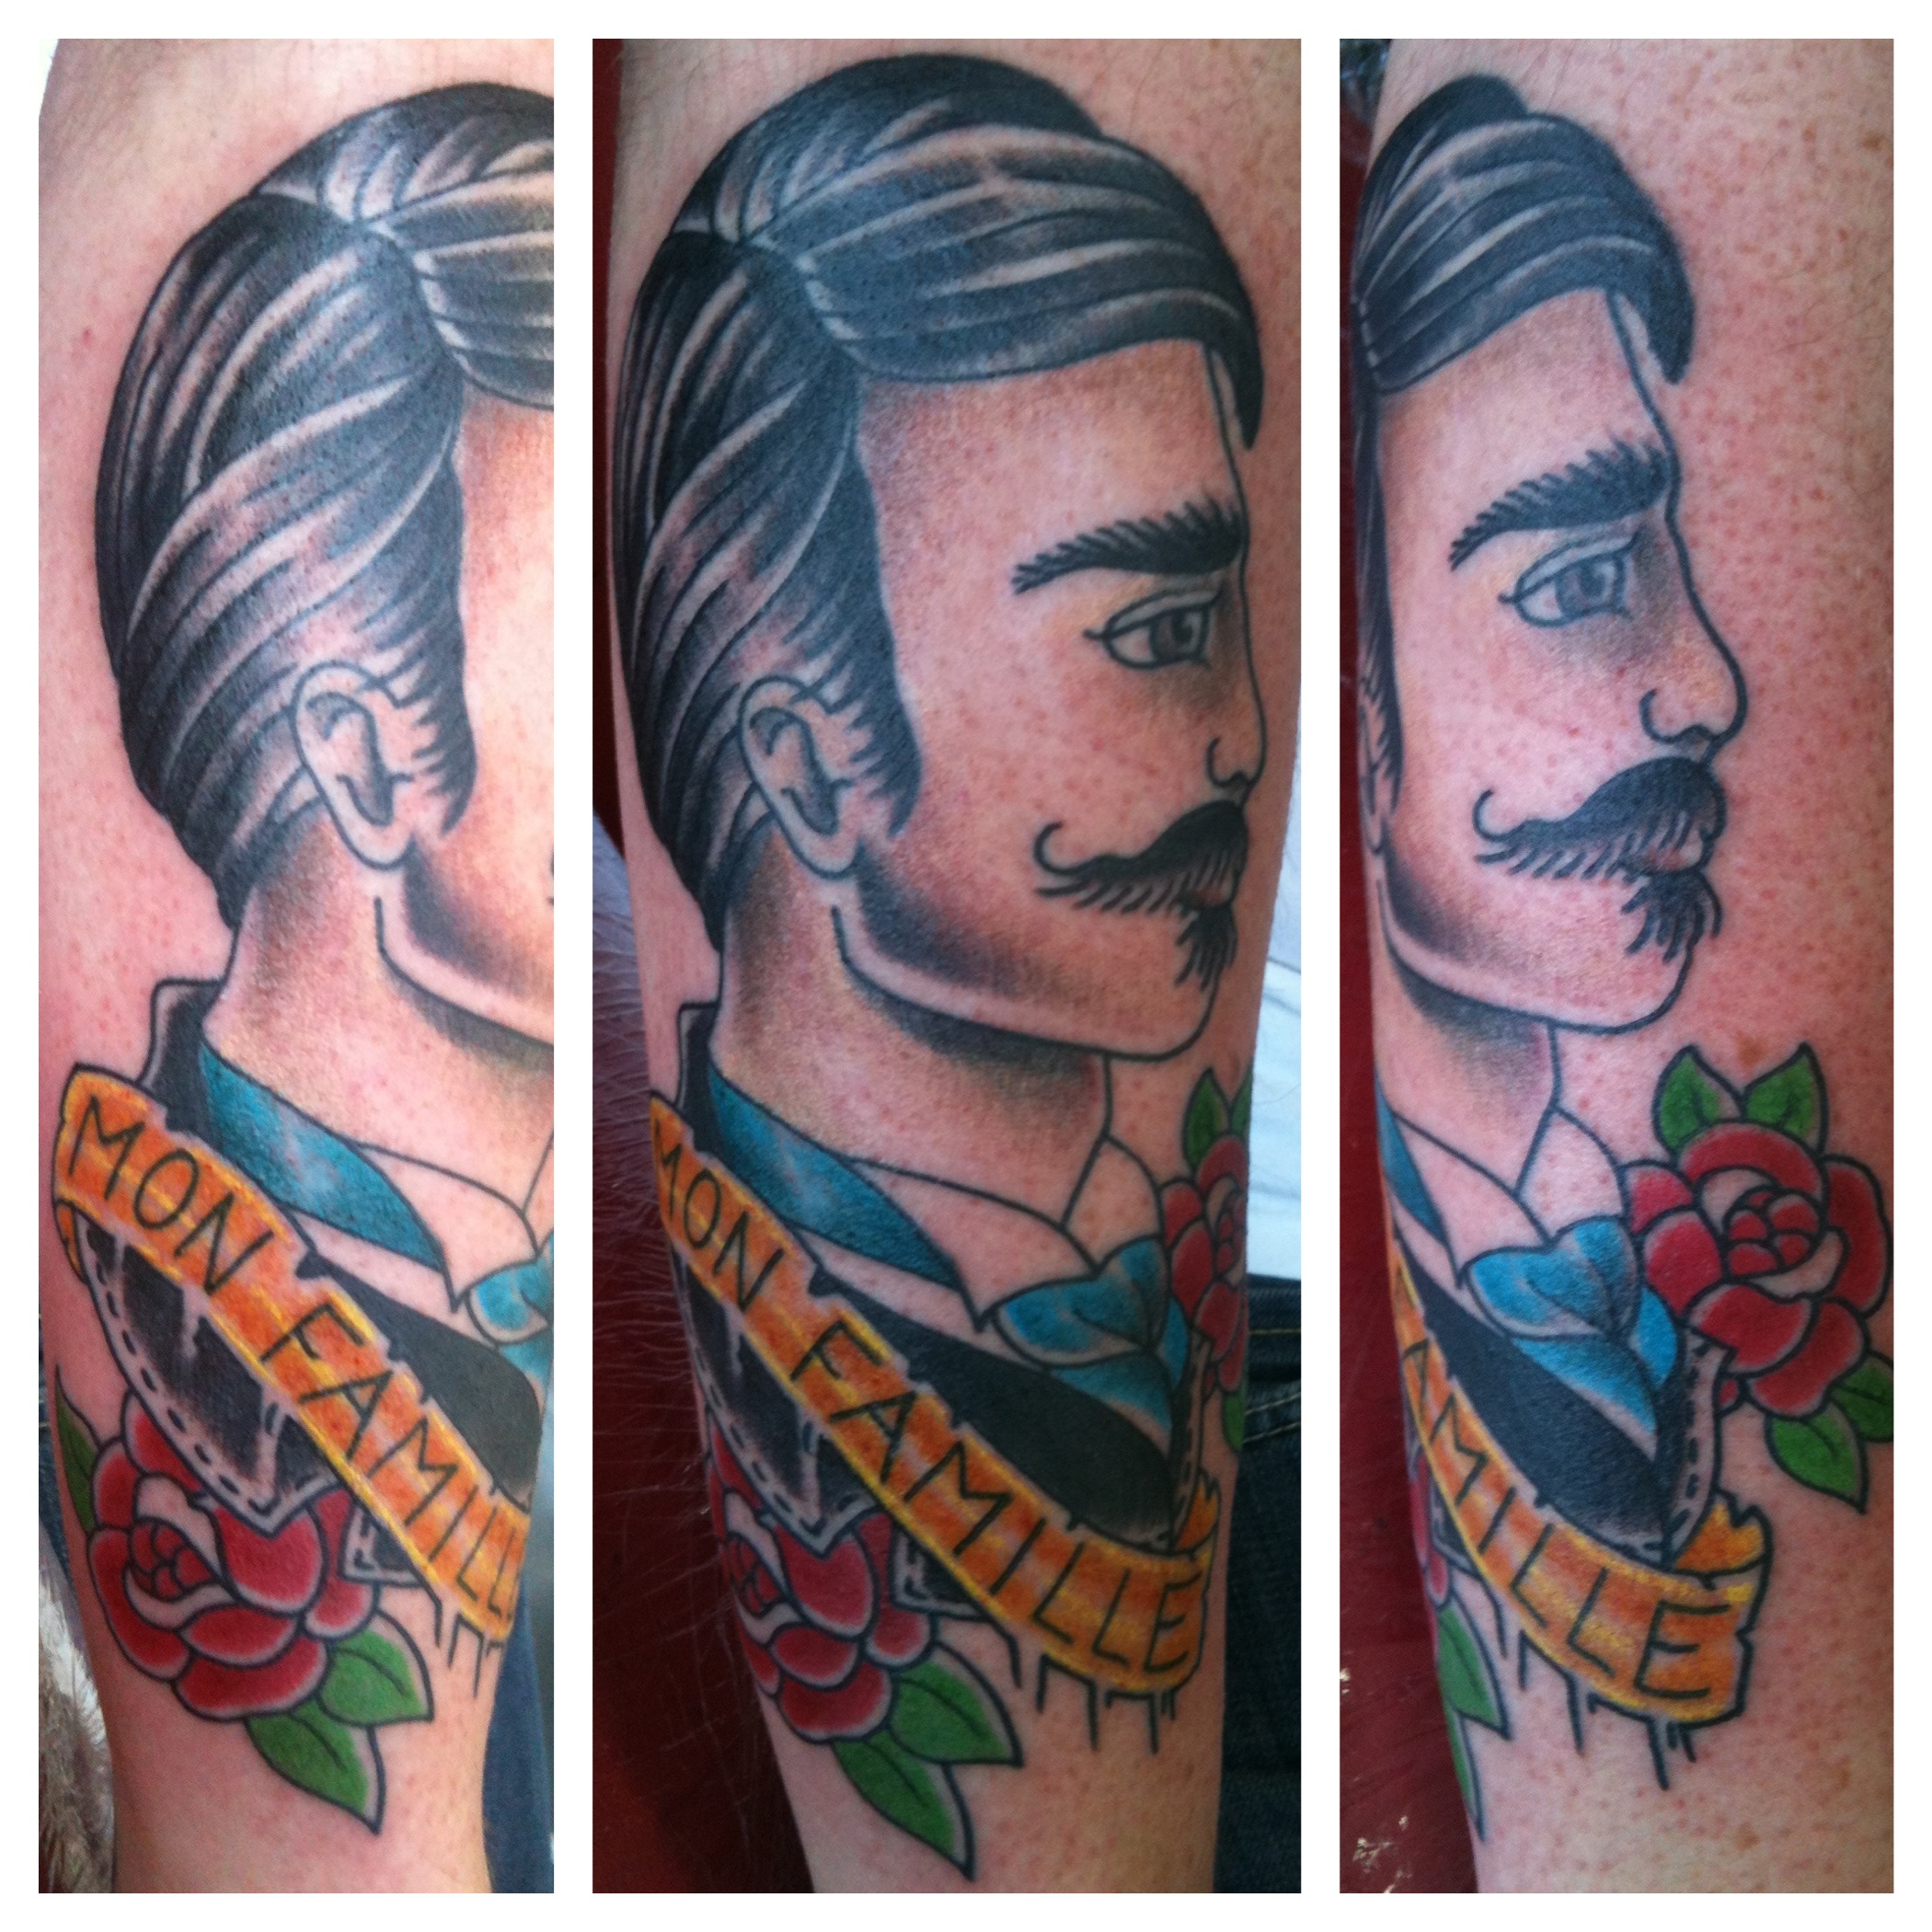 NES Jason. By Derek Blake, Ladies and Gentlemen Tattoo, Windham NH : r/ tattoos